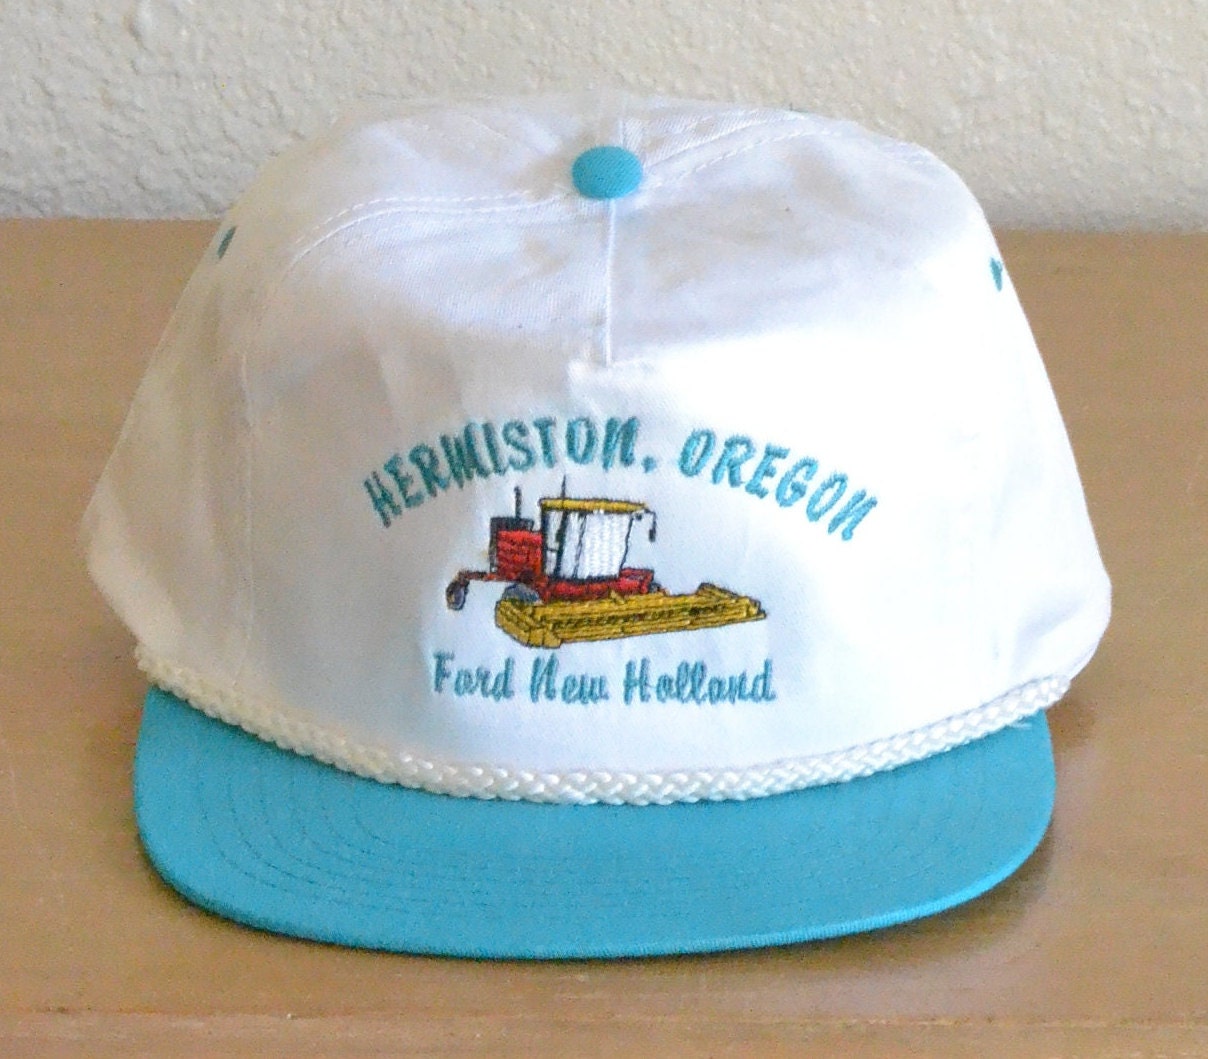 Vintage University of Oregon UO Ducks Trucker Hat - OS – Jak of all Vintage